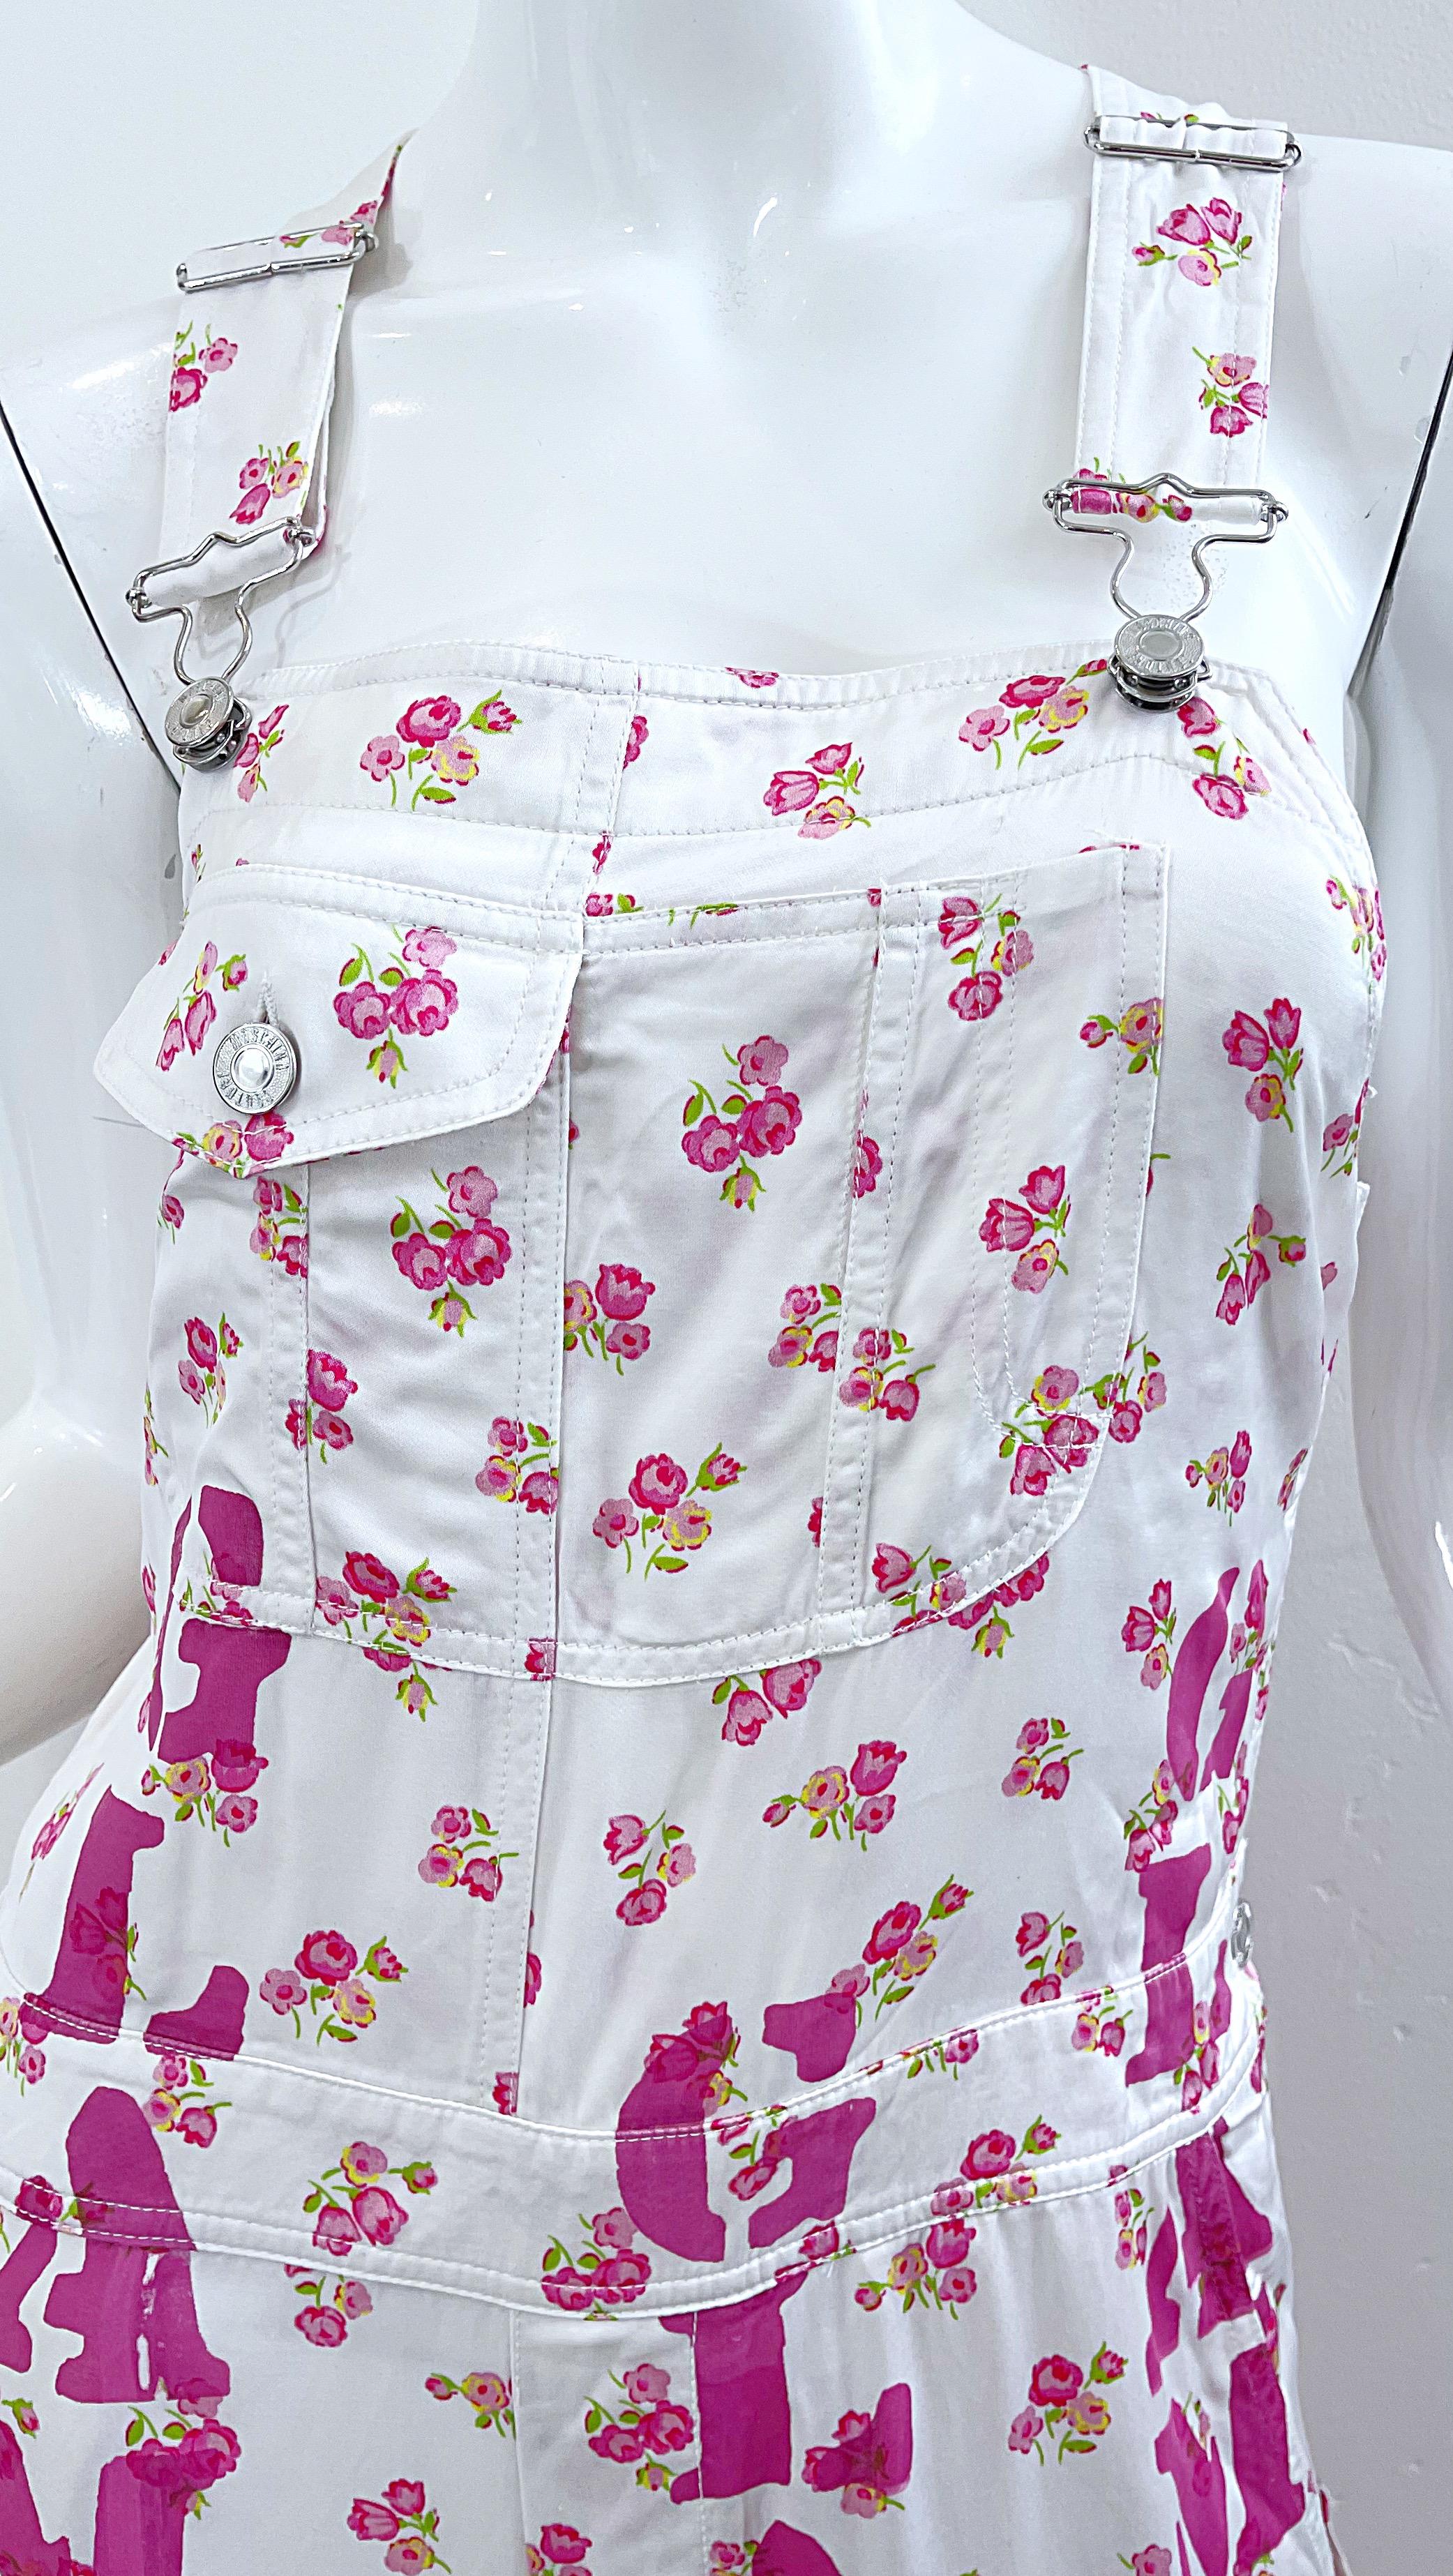 flower print overalls